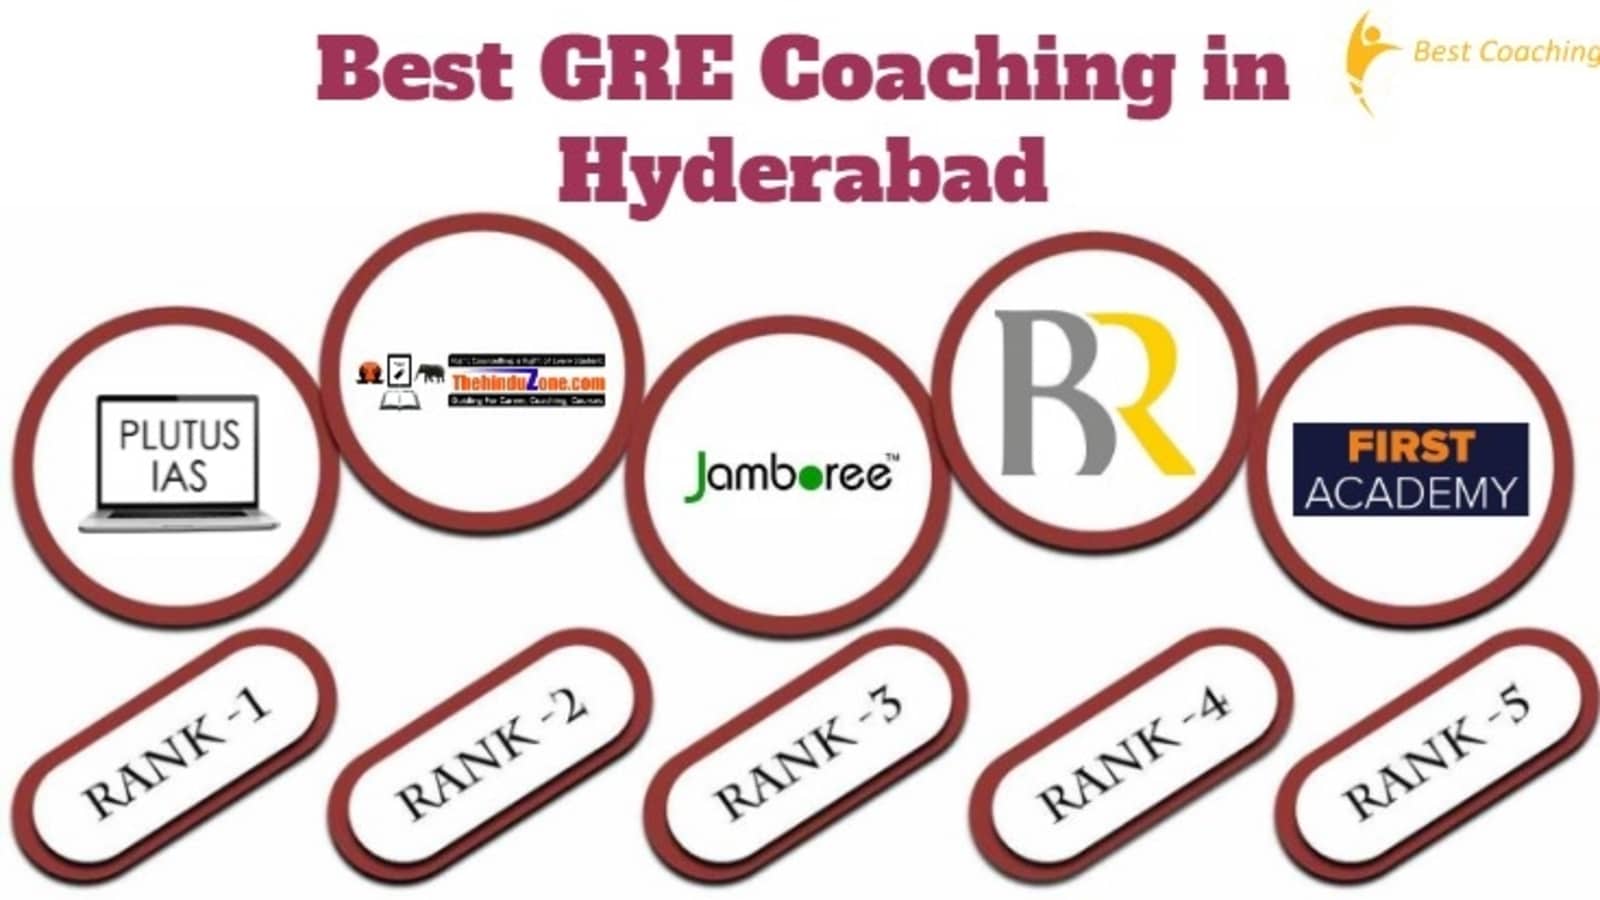 Best GRE Coaching in Hyderabad